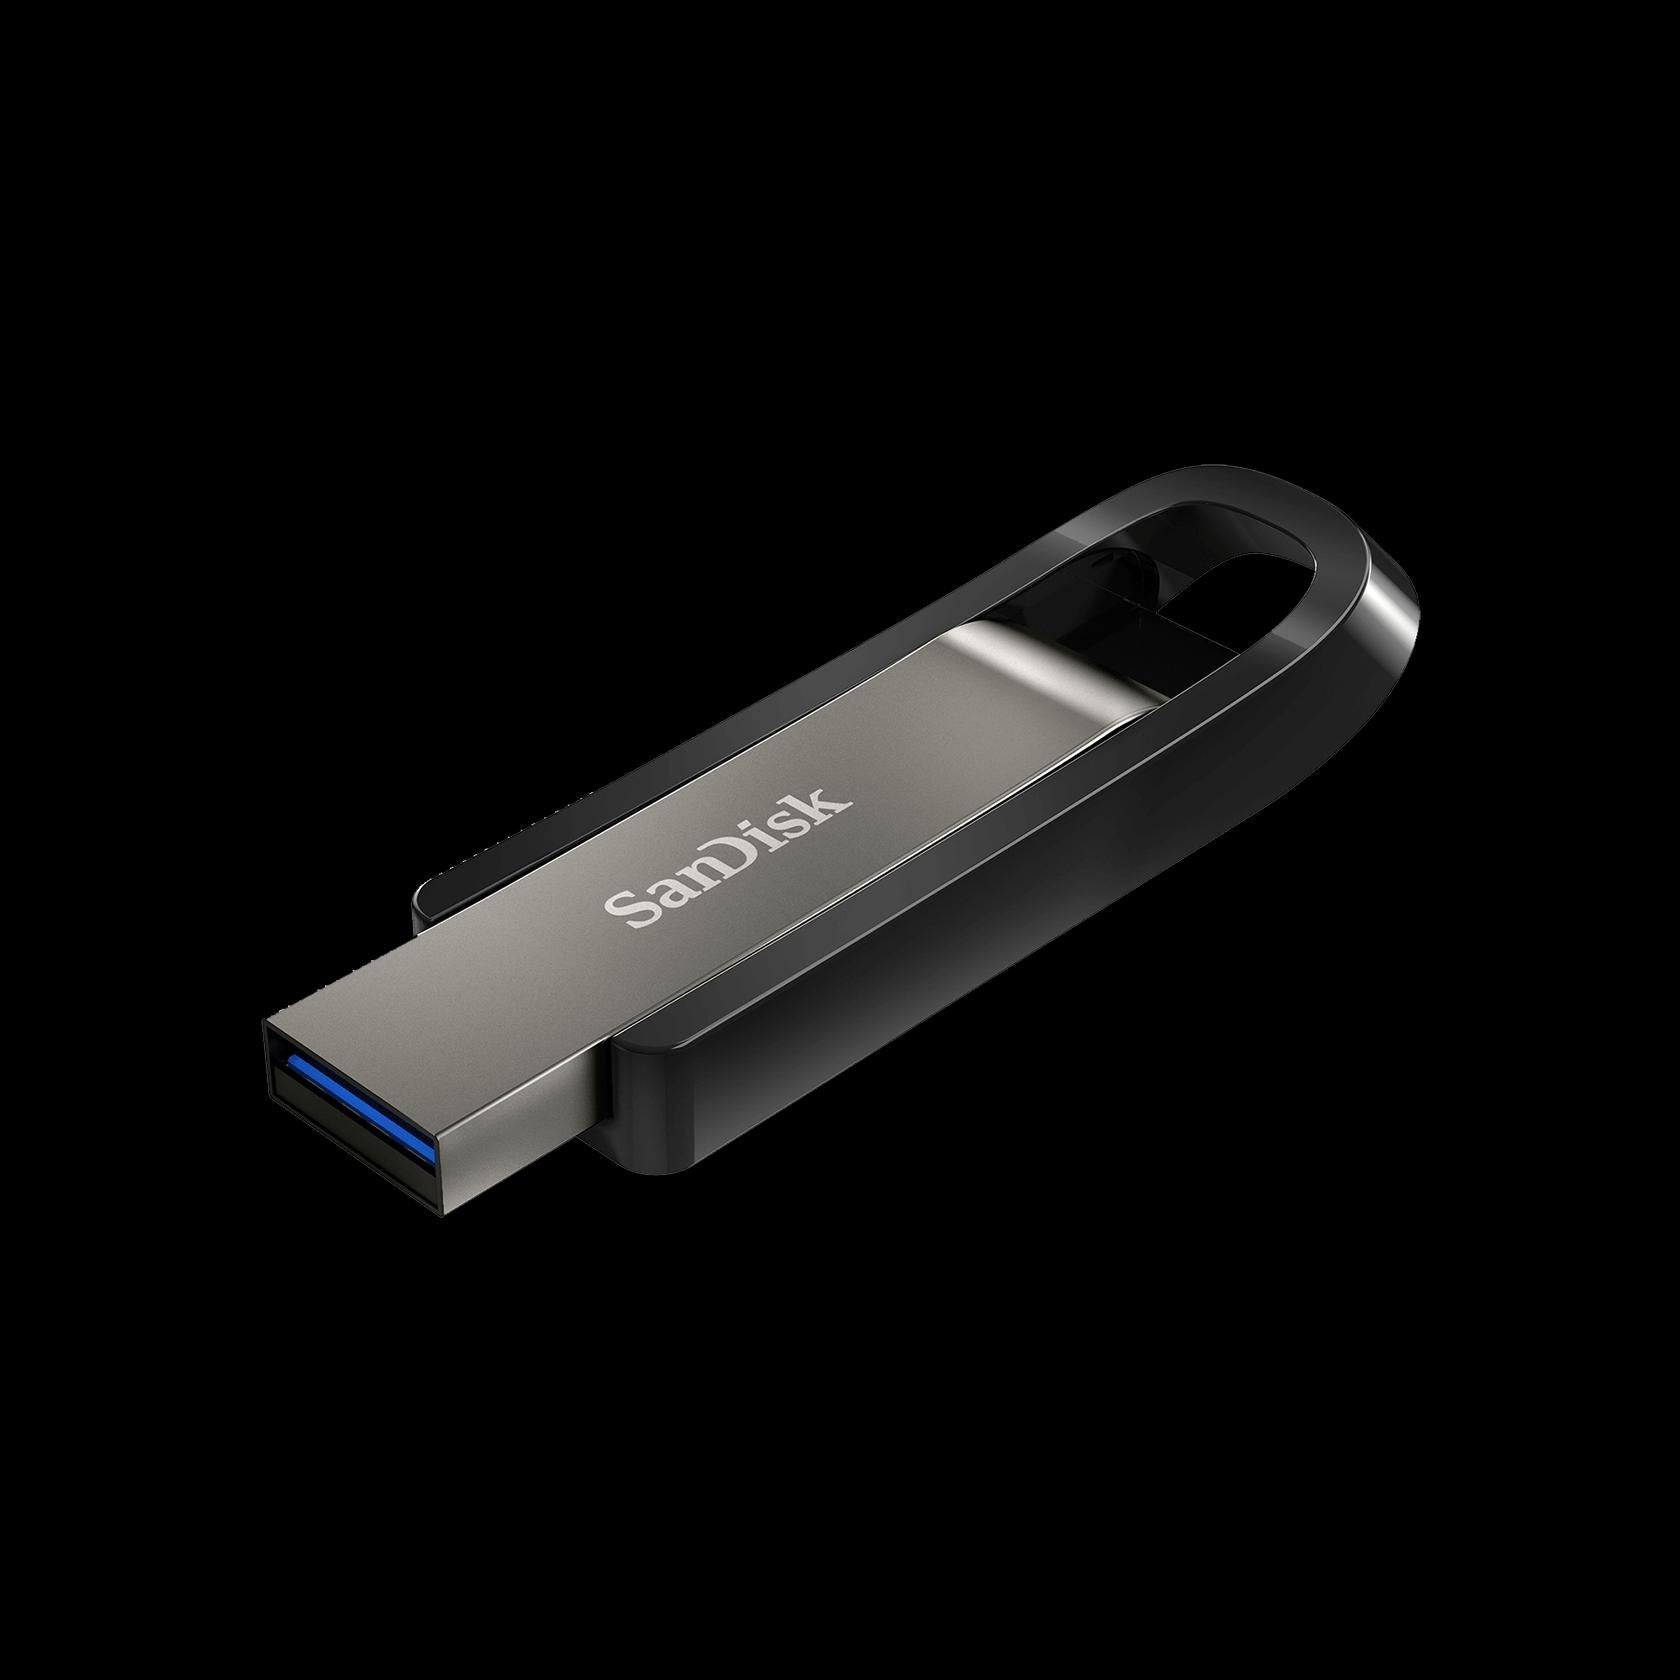 SanDisk SDCZ810-128G Extreme Go USB Drive Deals499